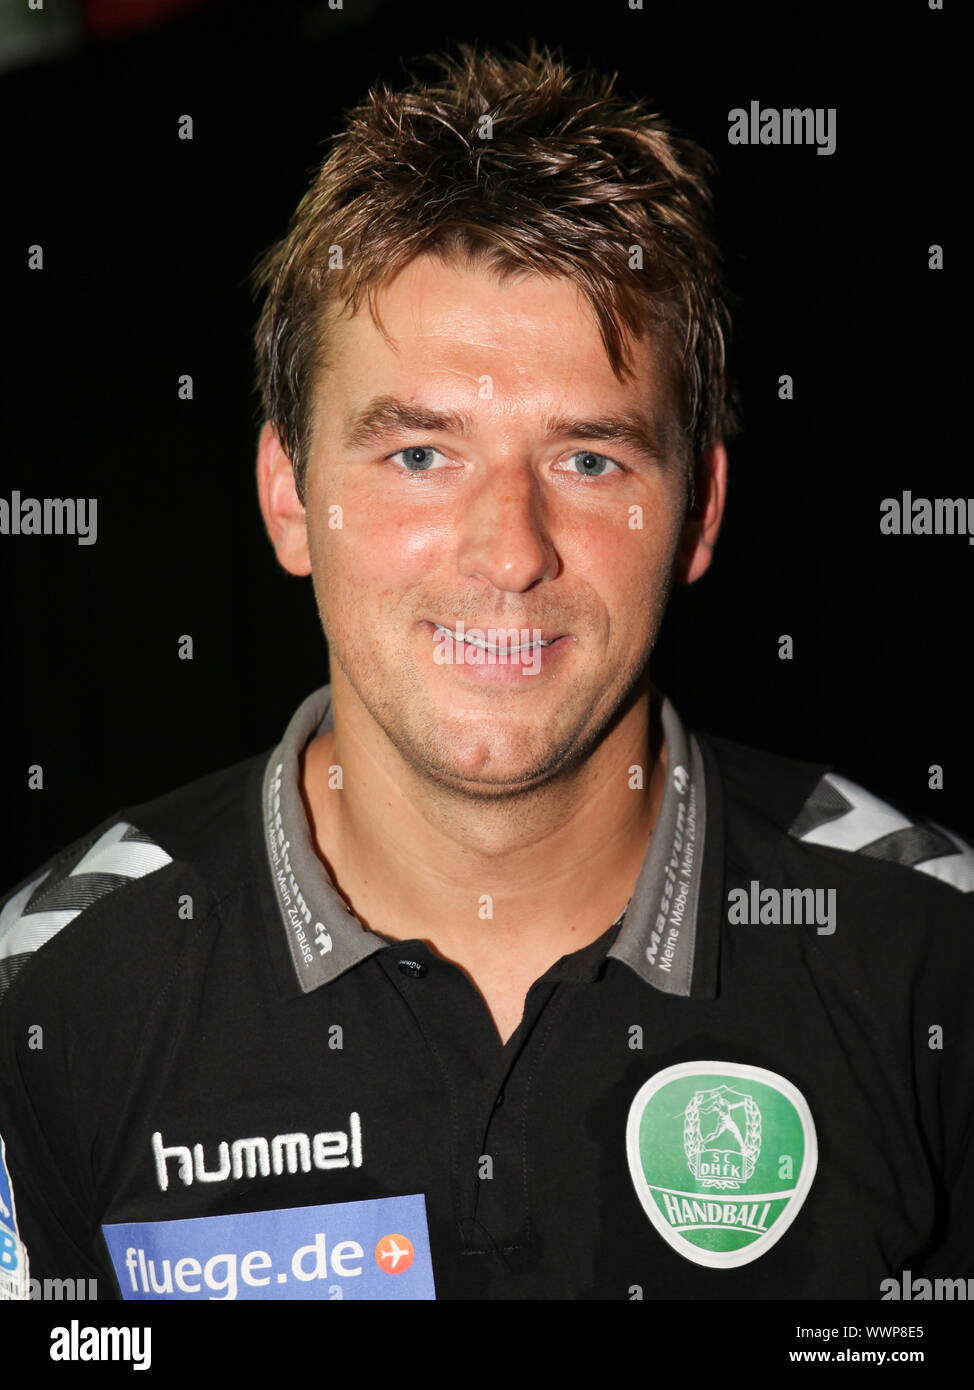 Deutscher Handballtrainer,ehemaliger Handballspieler Christian Prokop (SC DHfK Leipzig - Pallamano) Foto Stock